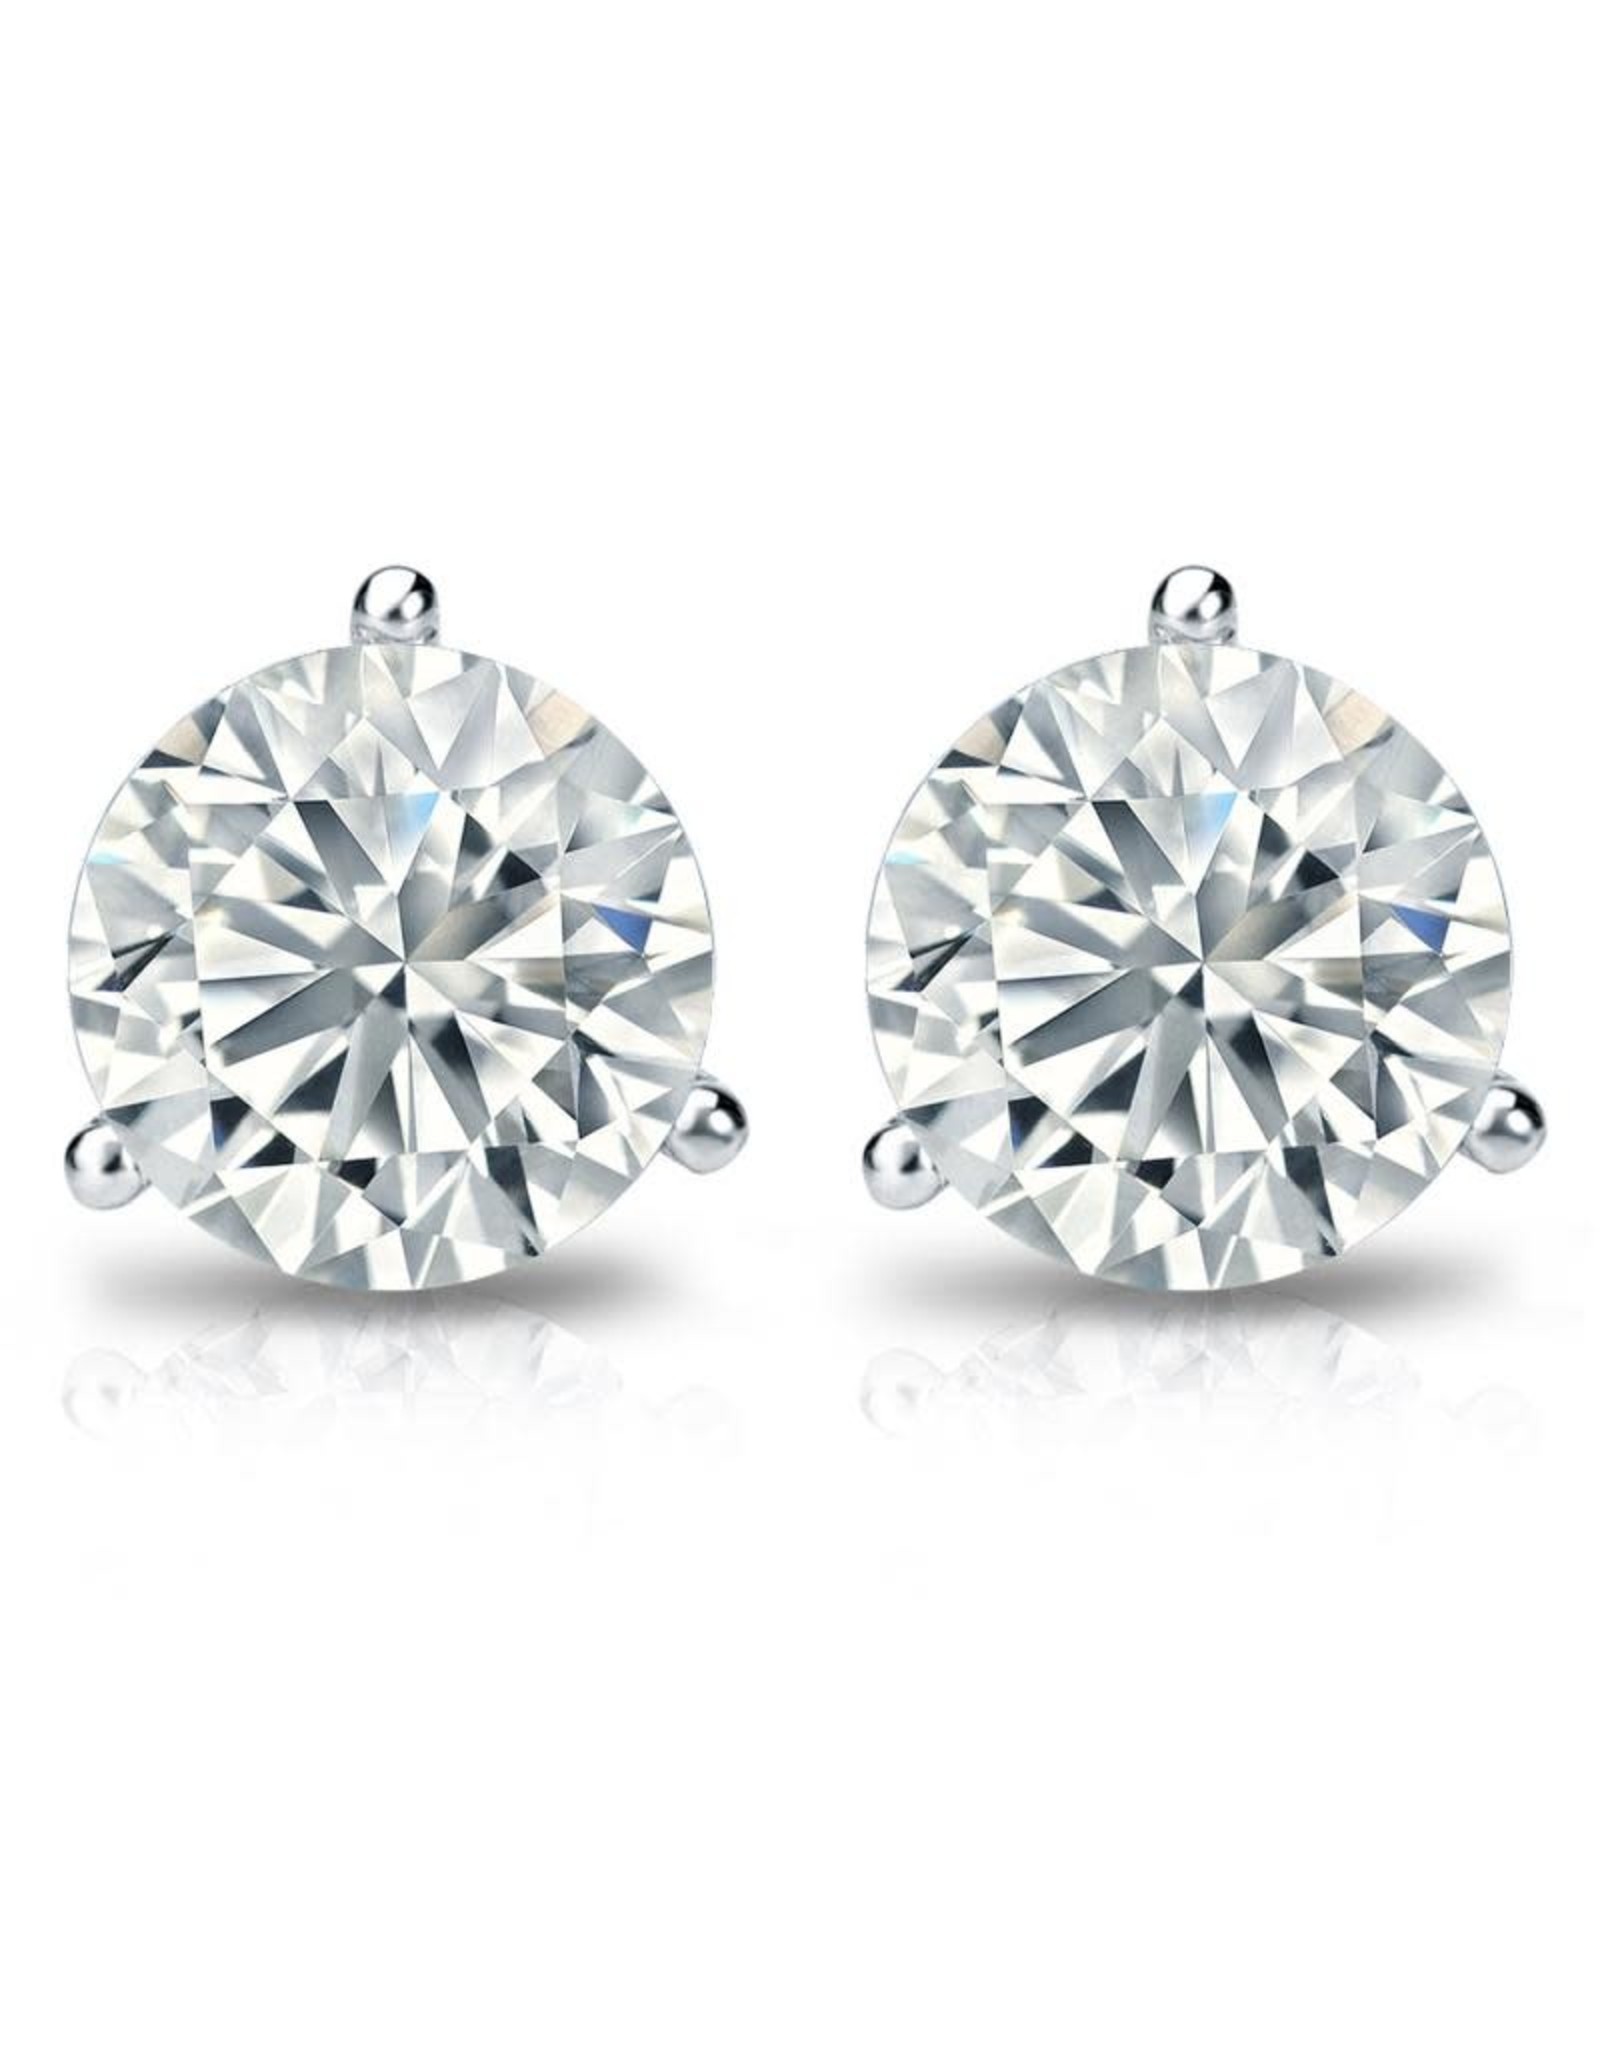 2 Carat Diamond Earrings Martini Setting Clearance  raazgalleryir  1694602993